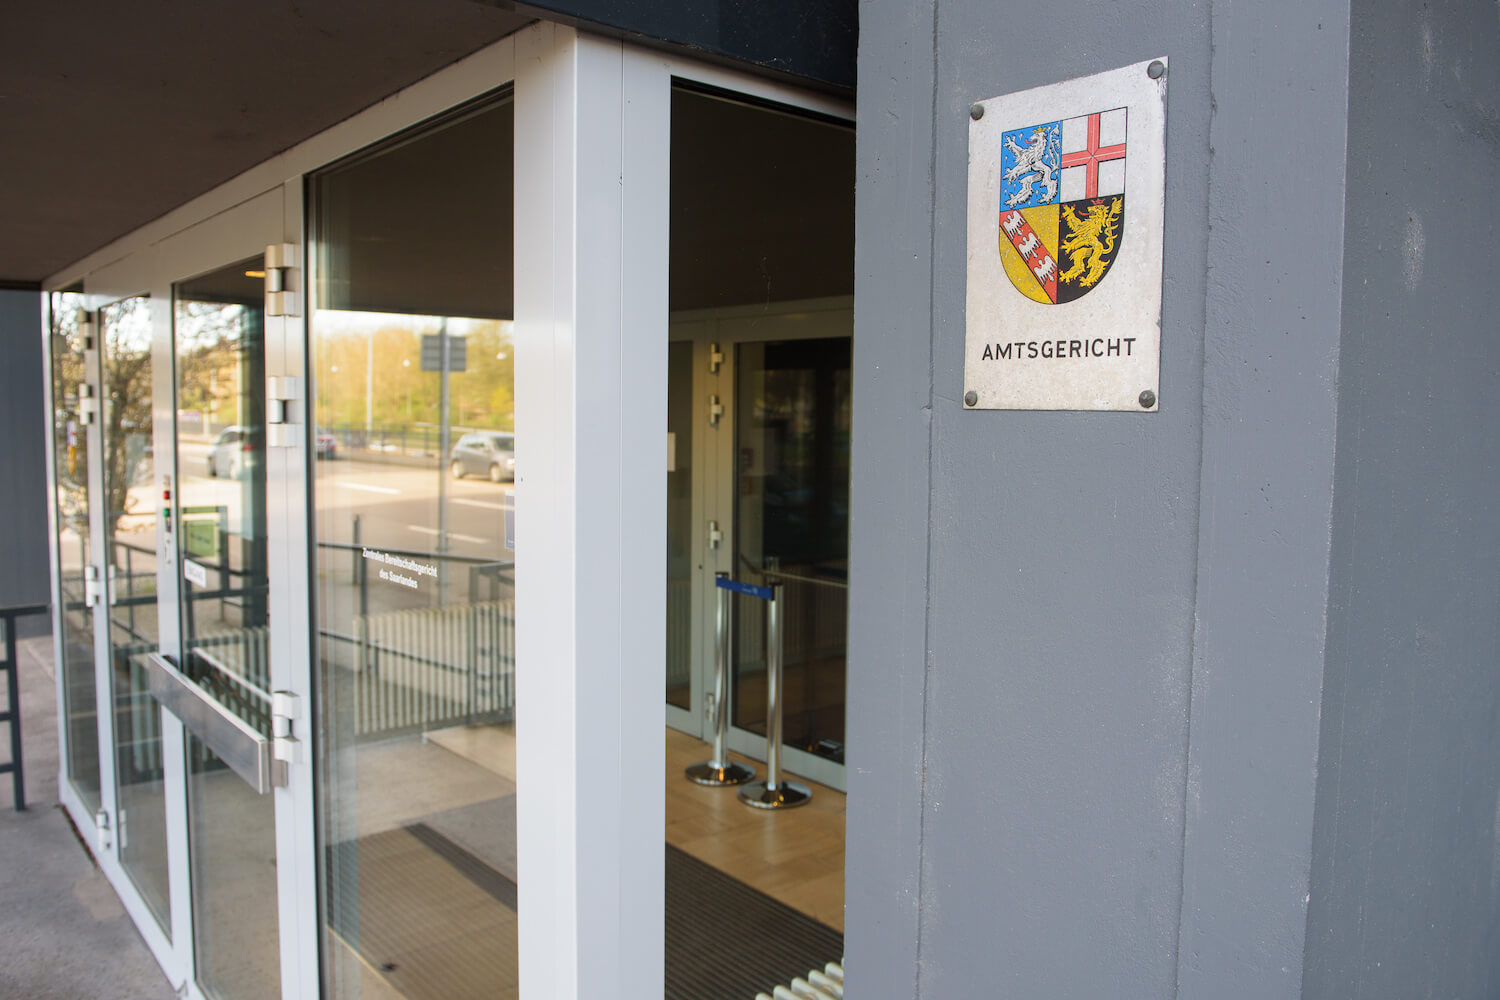 Amtsgericht Saarbrücken Symbolbild vom Eingang